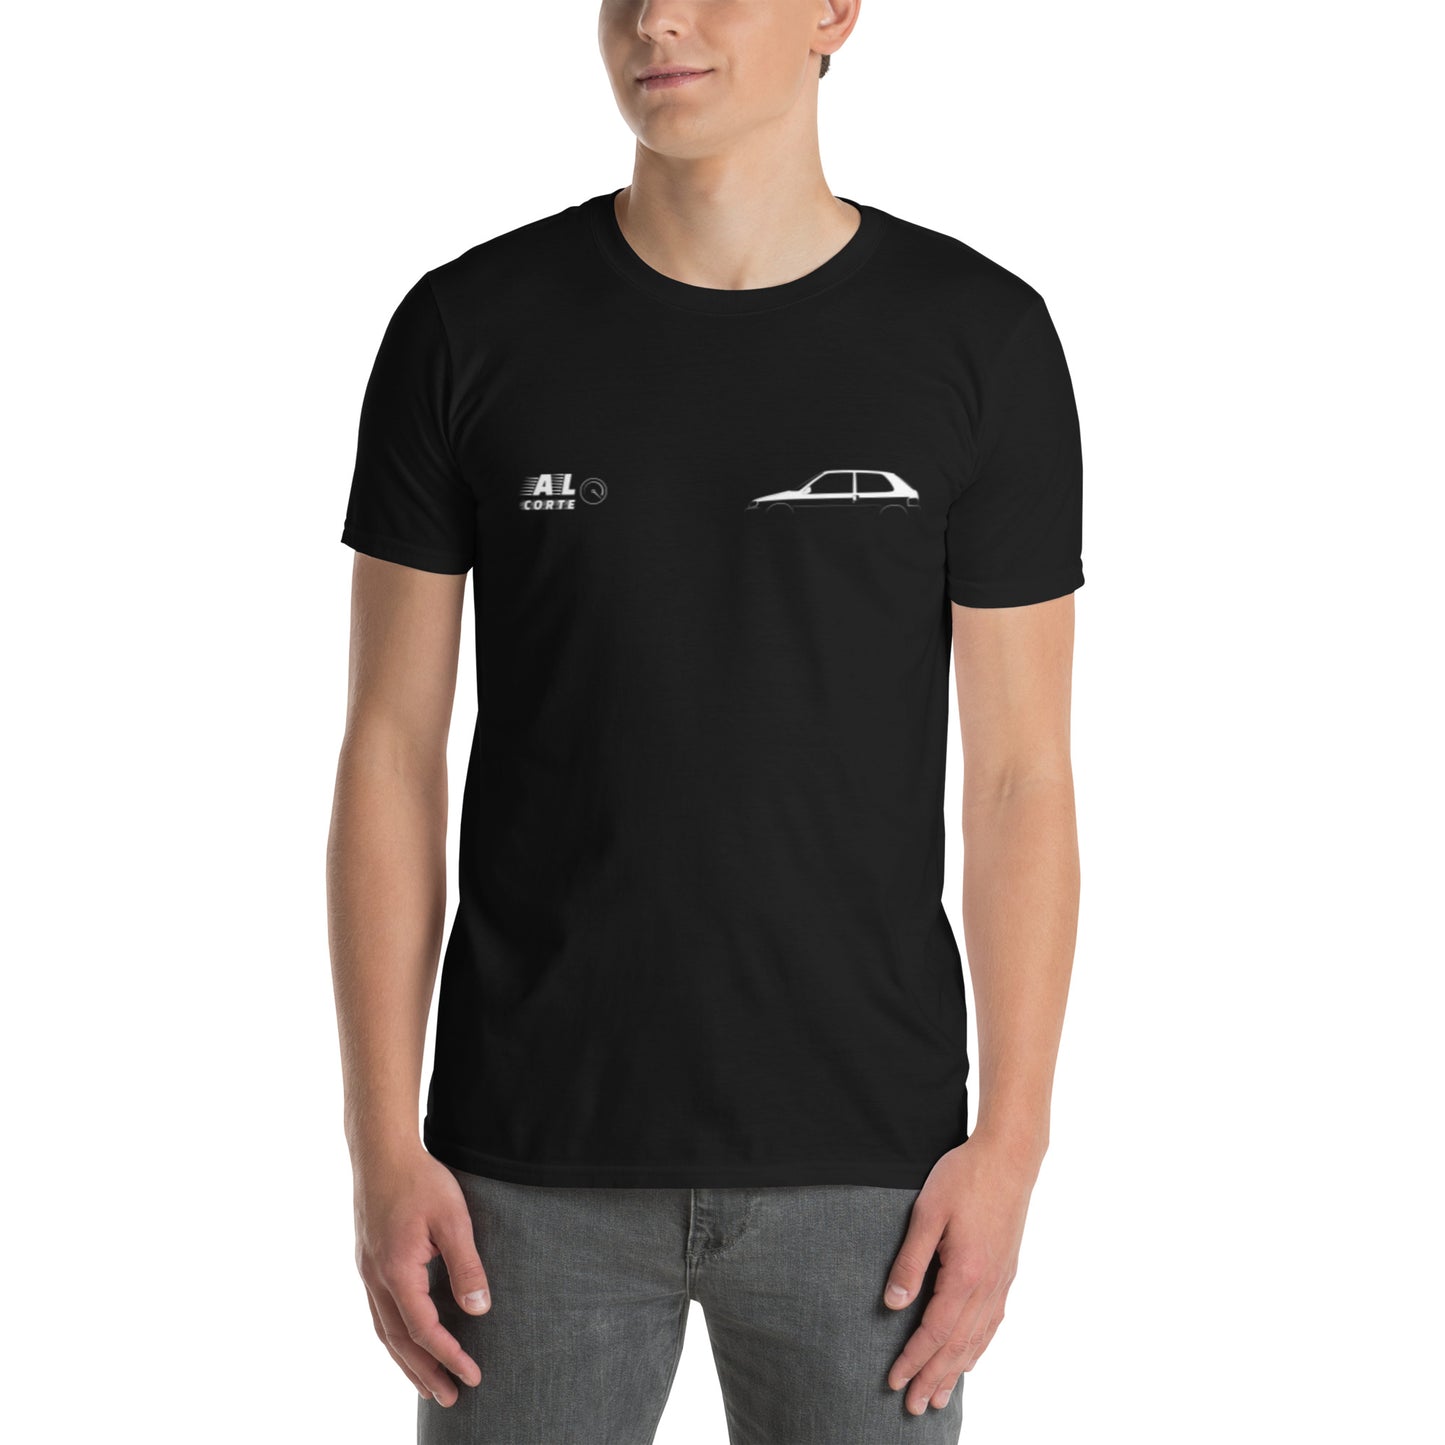 Saxo VTS T-Shirt